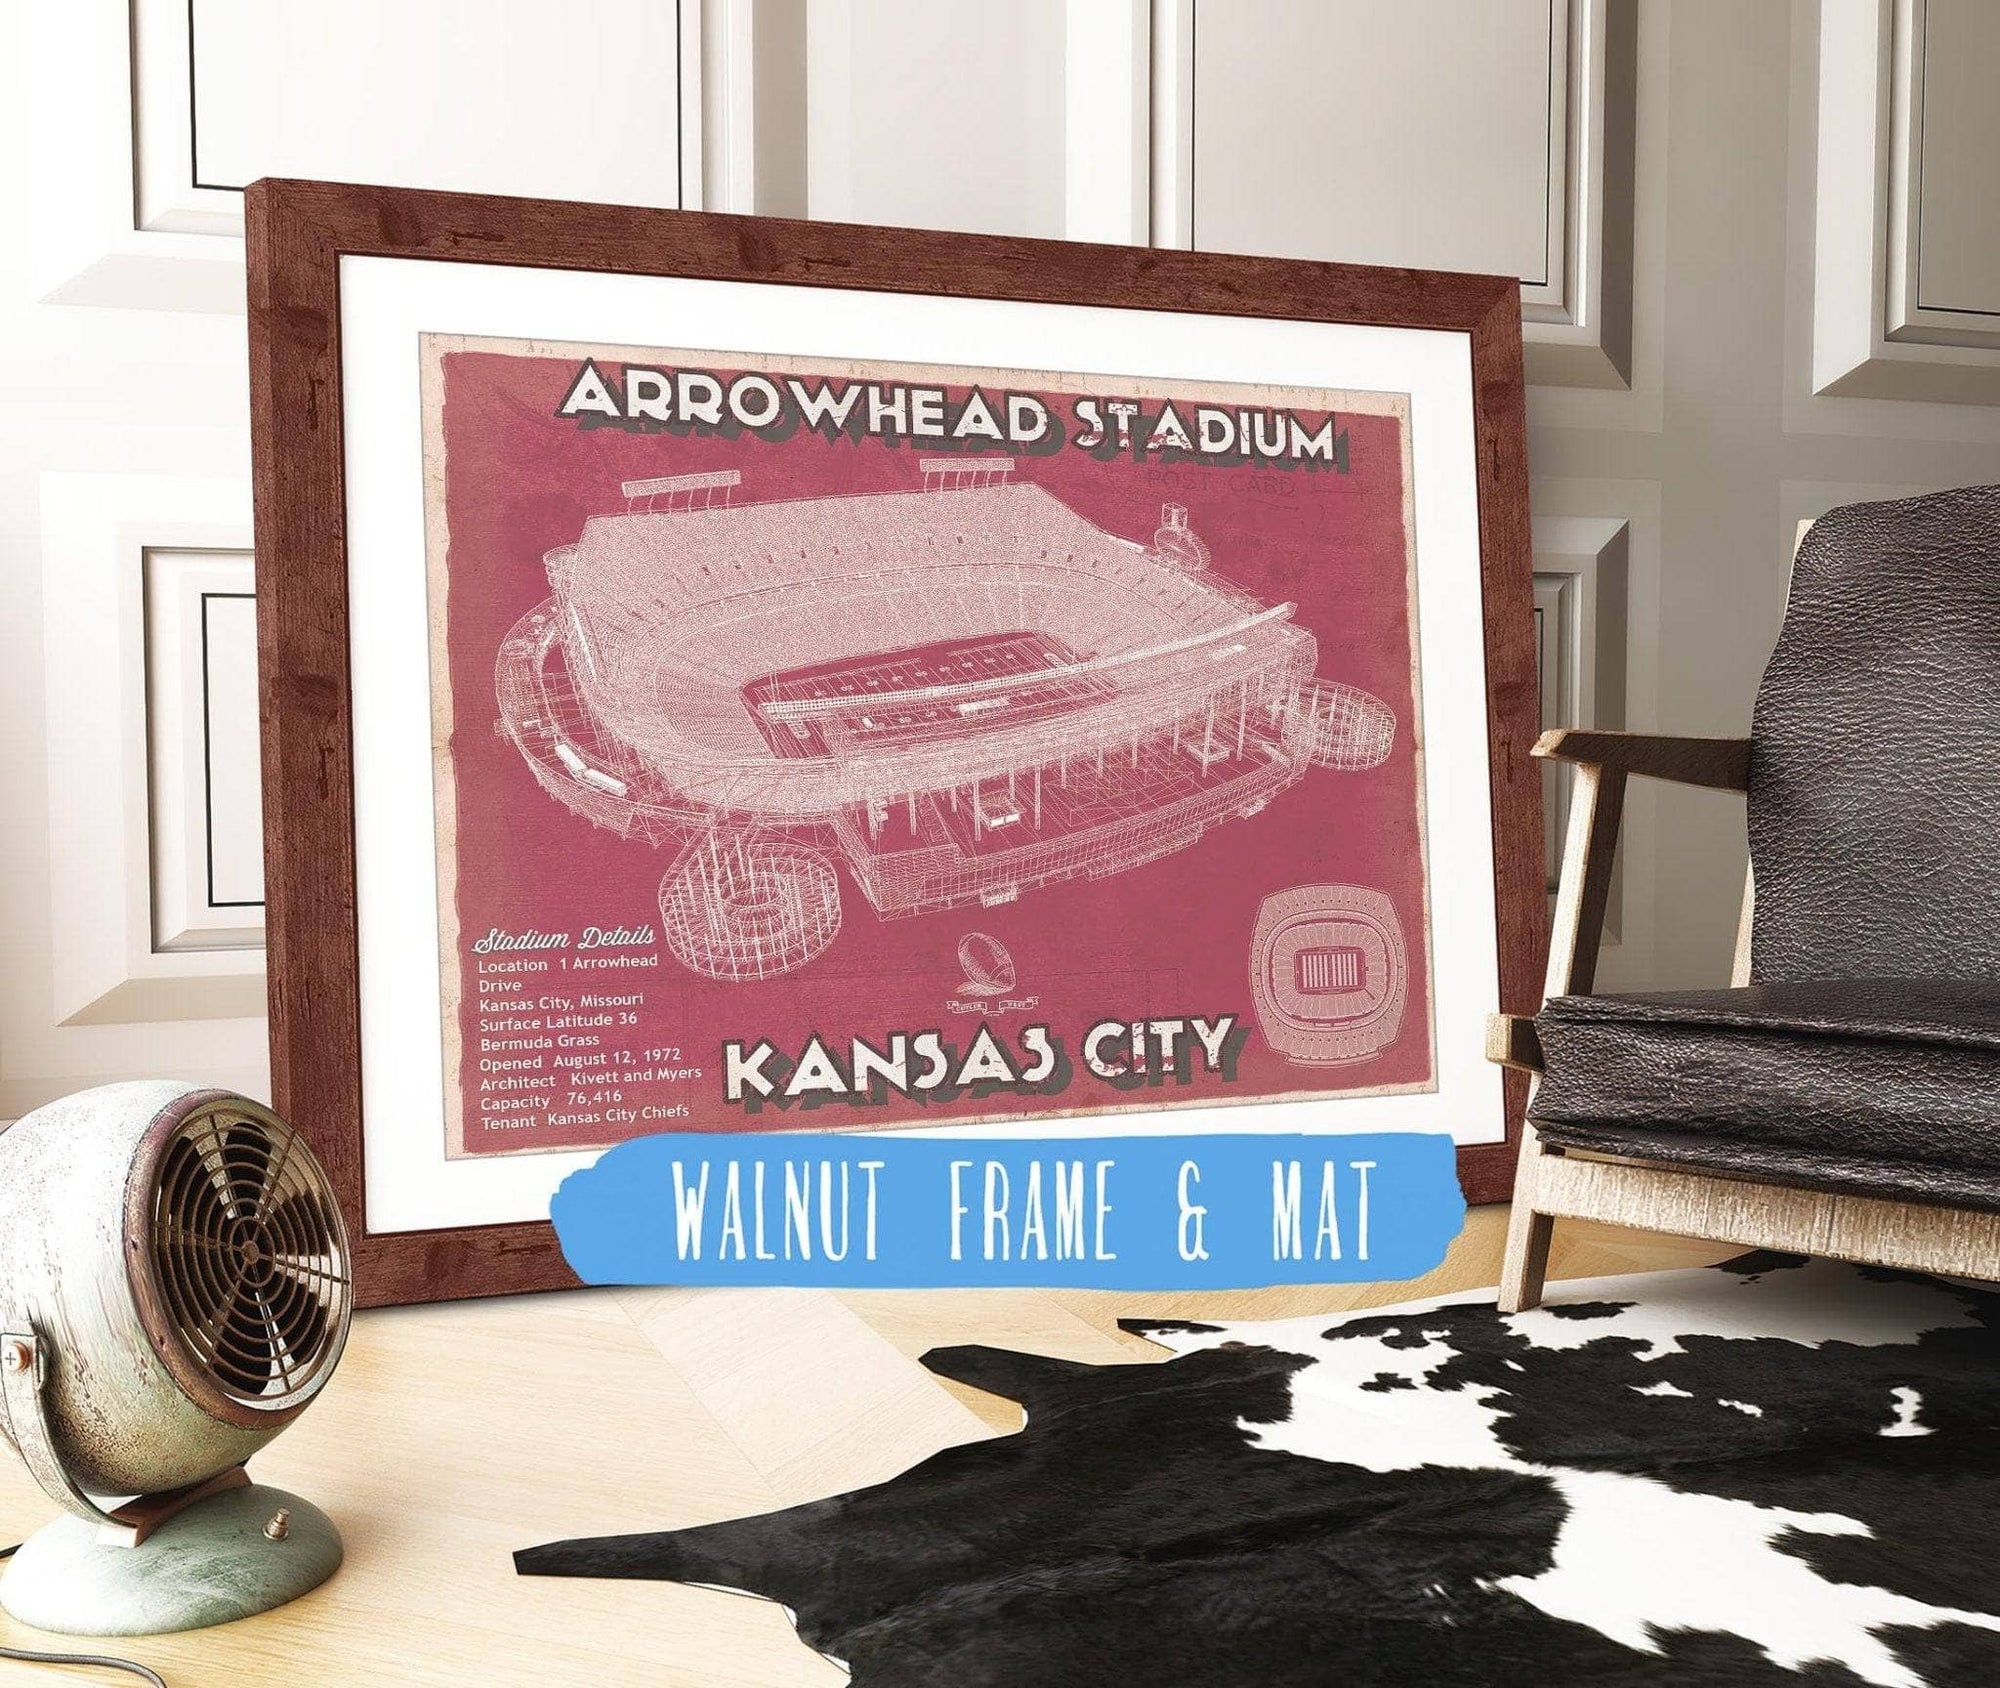 Cutler West Pro Football Collection 14" x 11" / Walnut Frame & Mat Kansas City Chiefs Arrowhead Stadium Vintage Football Print 698887690